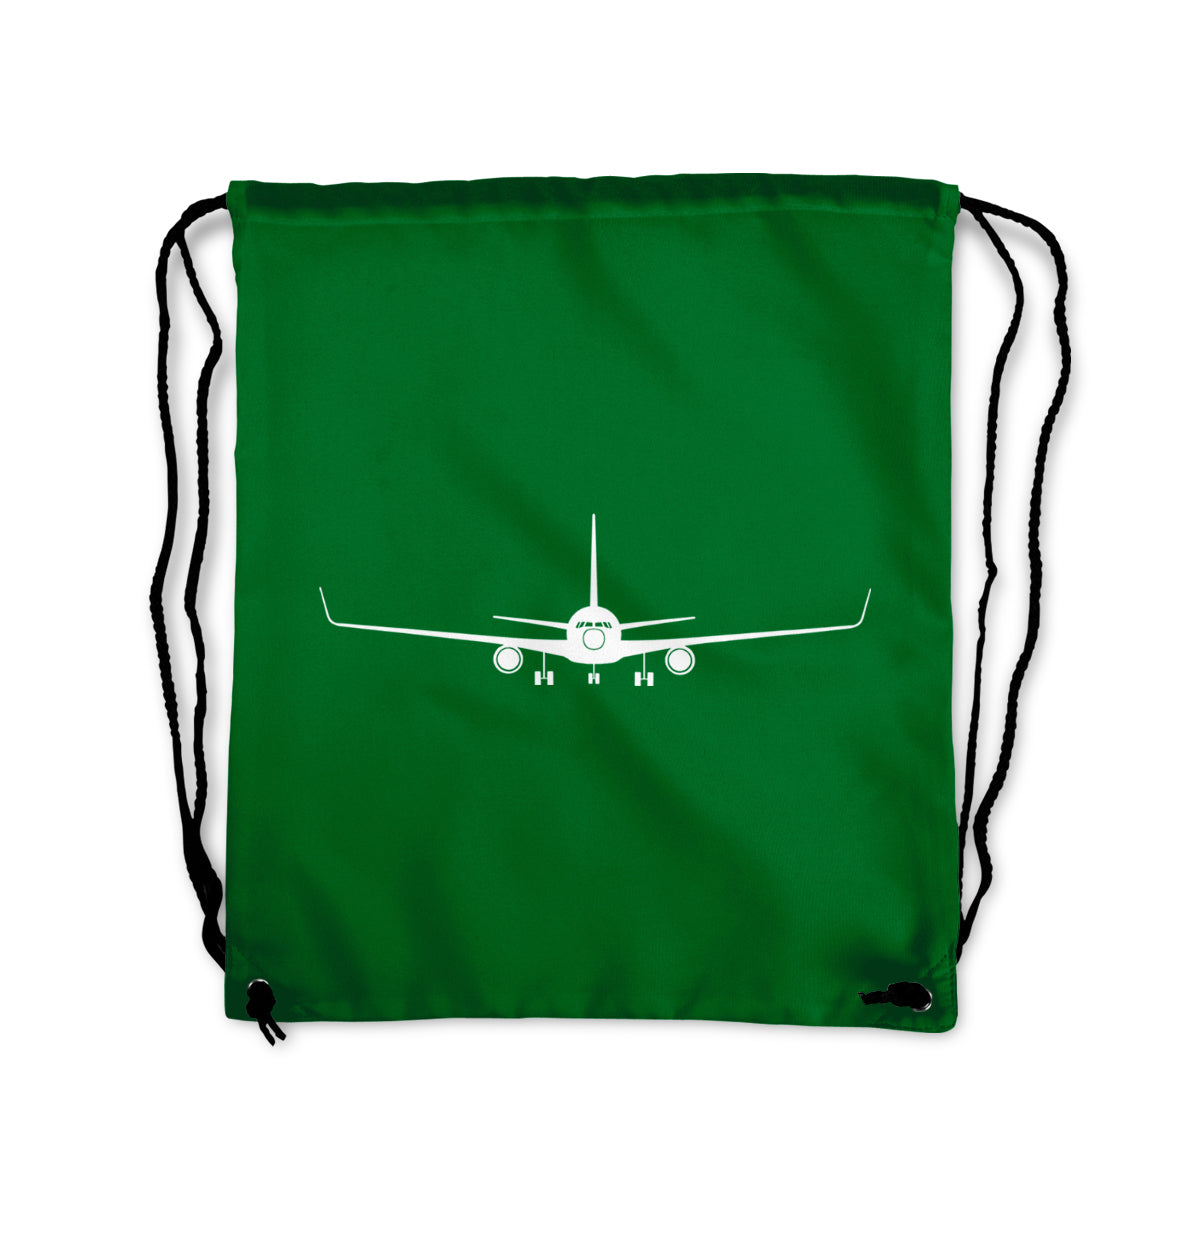 Boeing 767 Silhouette Designed Drawstring Bags